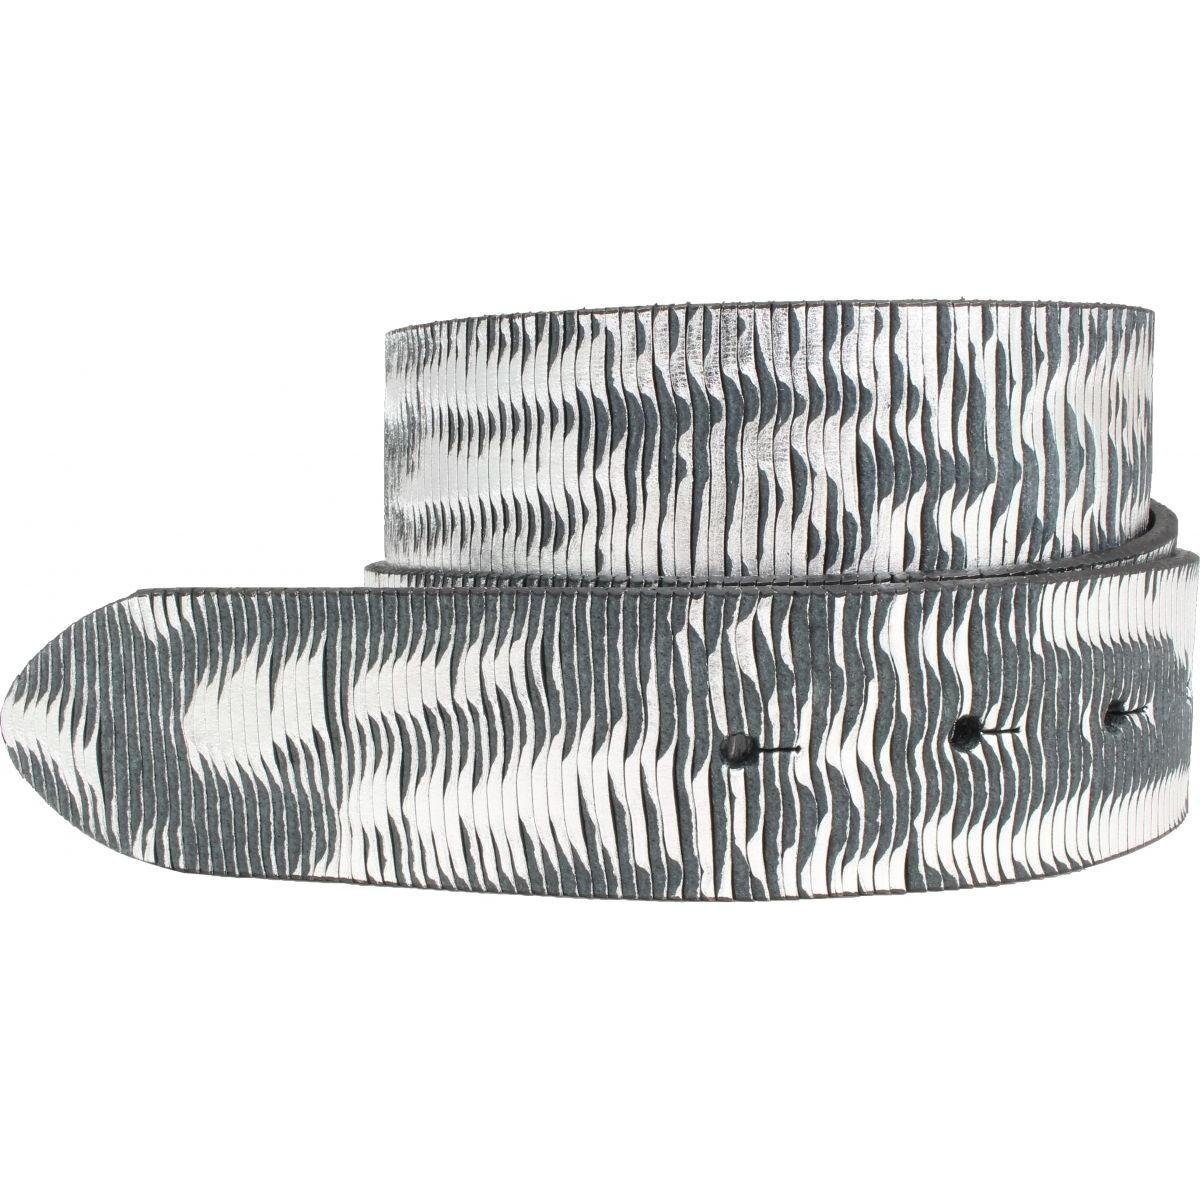 BELTINGER Ledergürtel Gürtel aus Vollrindleder Metall-Optik ohne Schnalle 4 cm - Leder-Gürte Schwarz Metallik